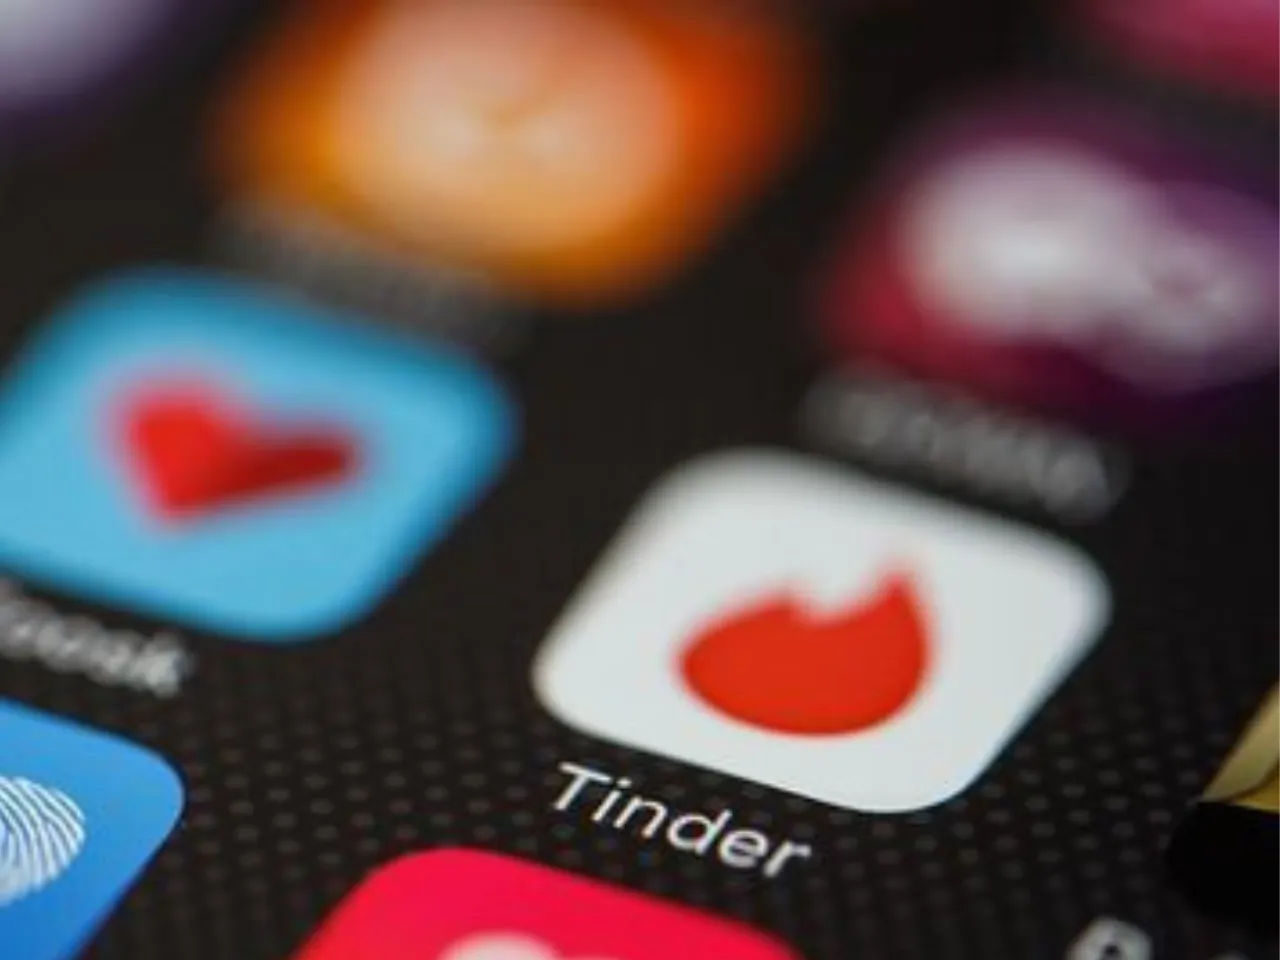 dating apps for women